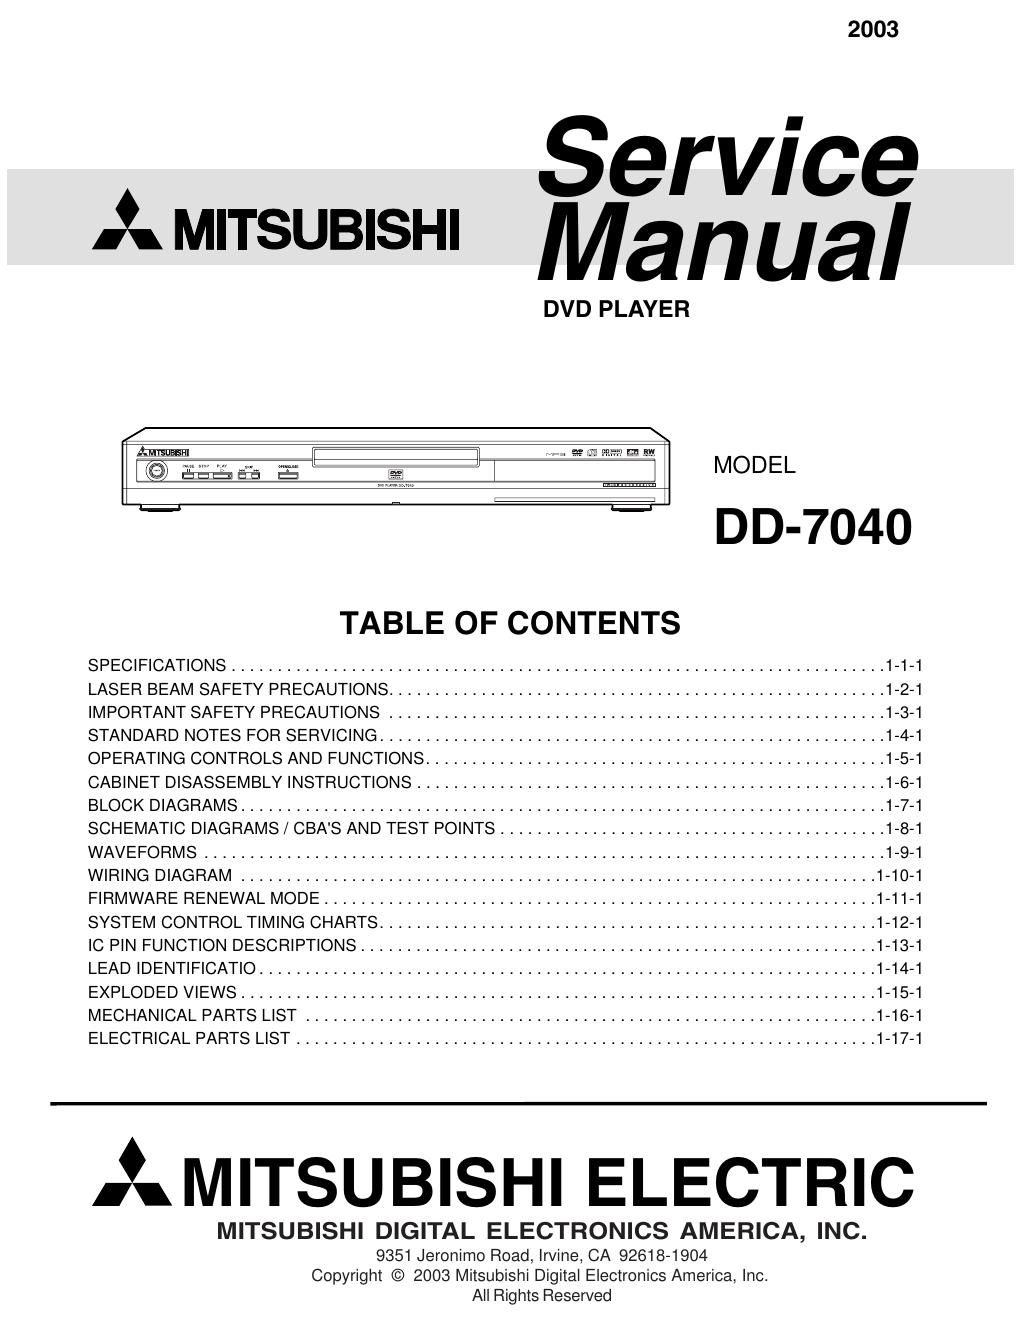 mitsubishi dd 7040 service manual